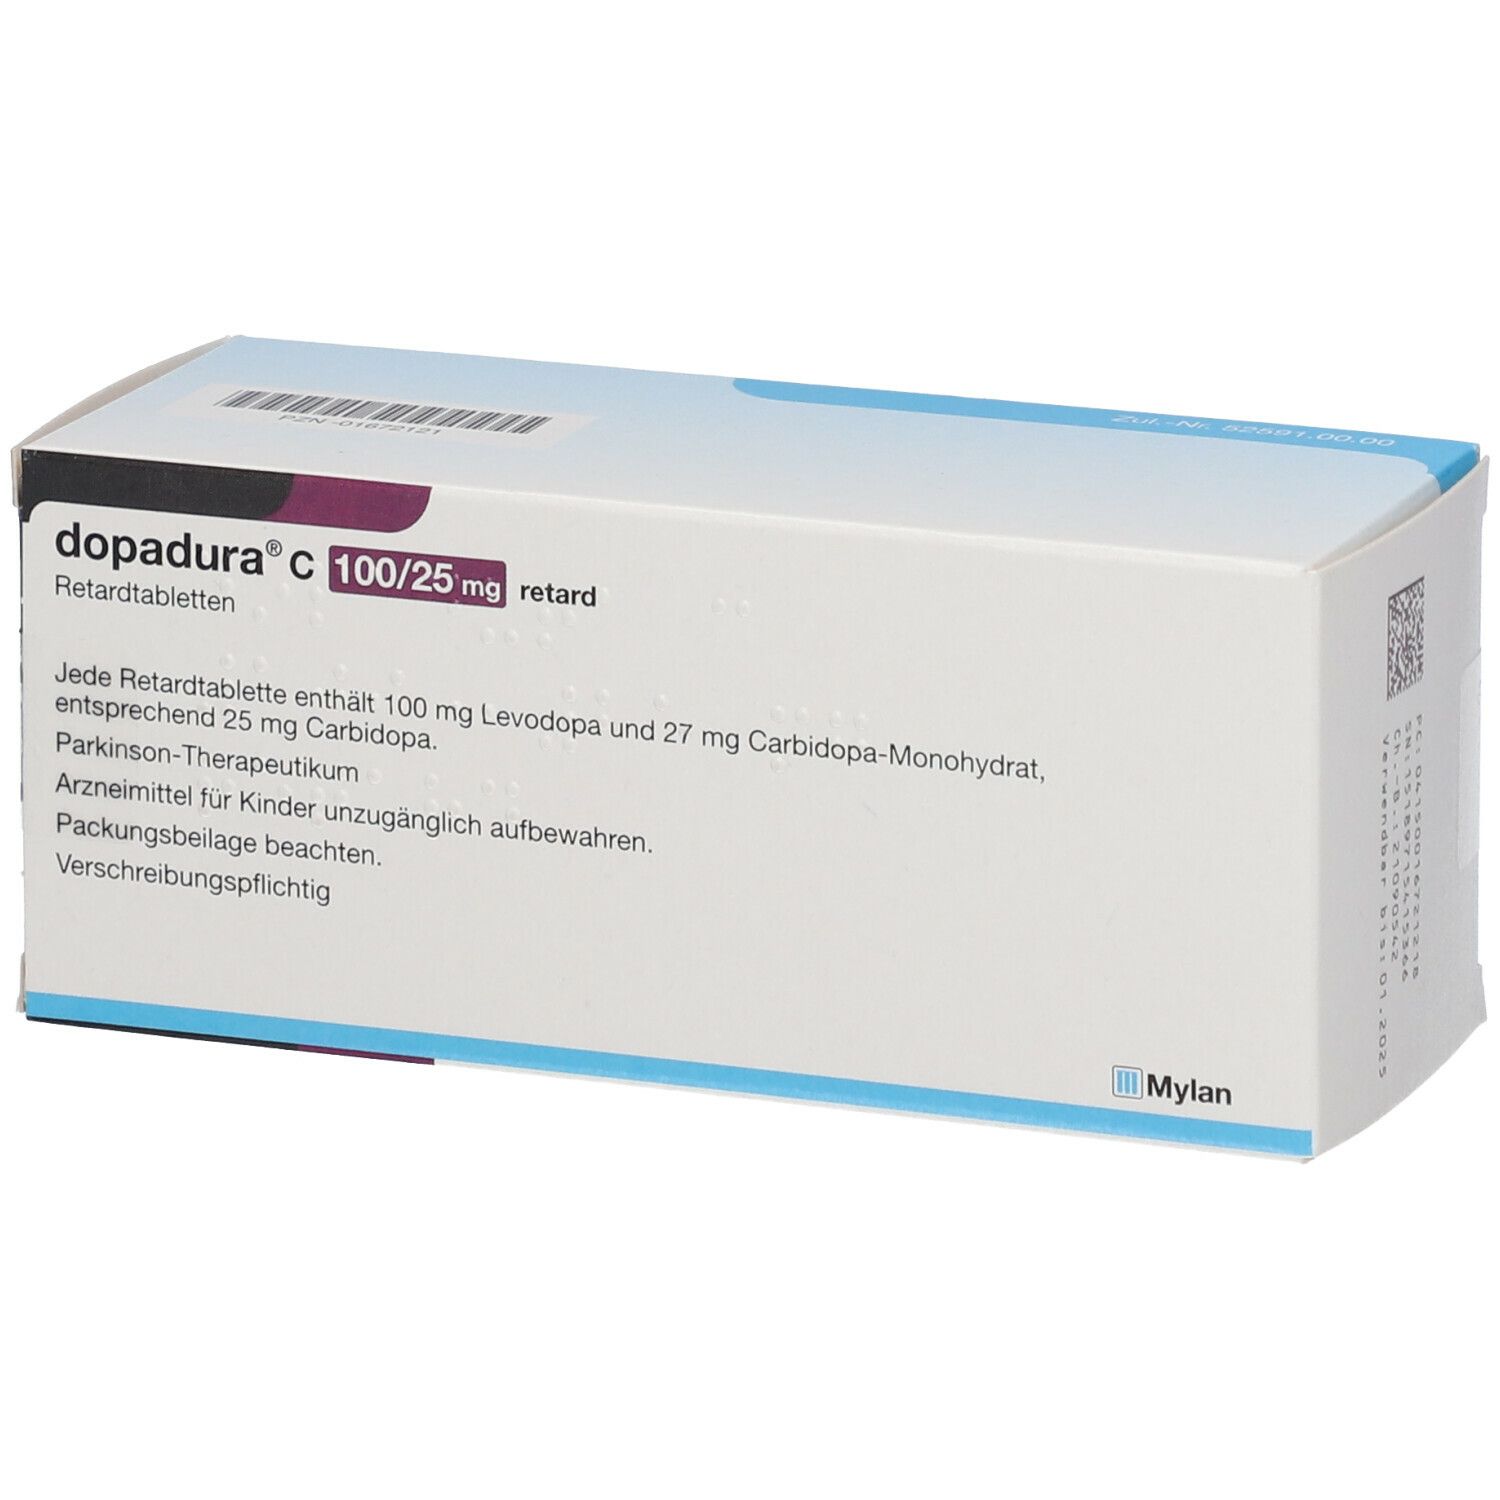 Dopadura® C 100/25 mg retard